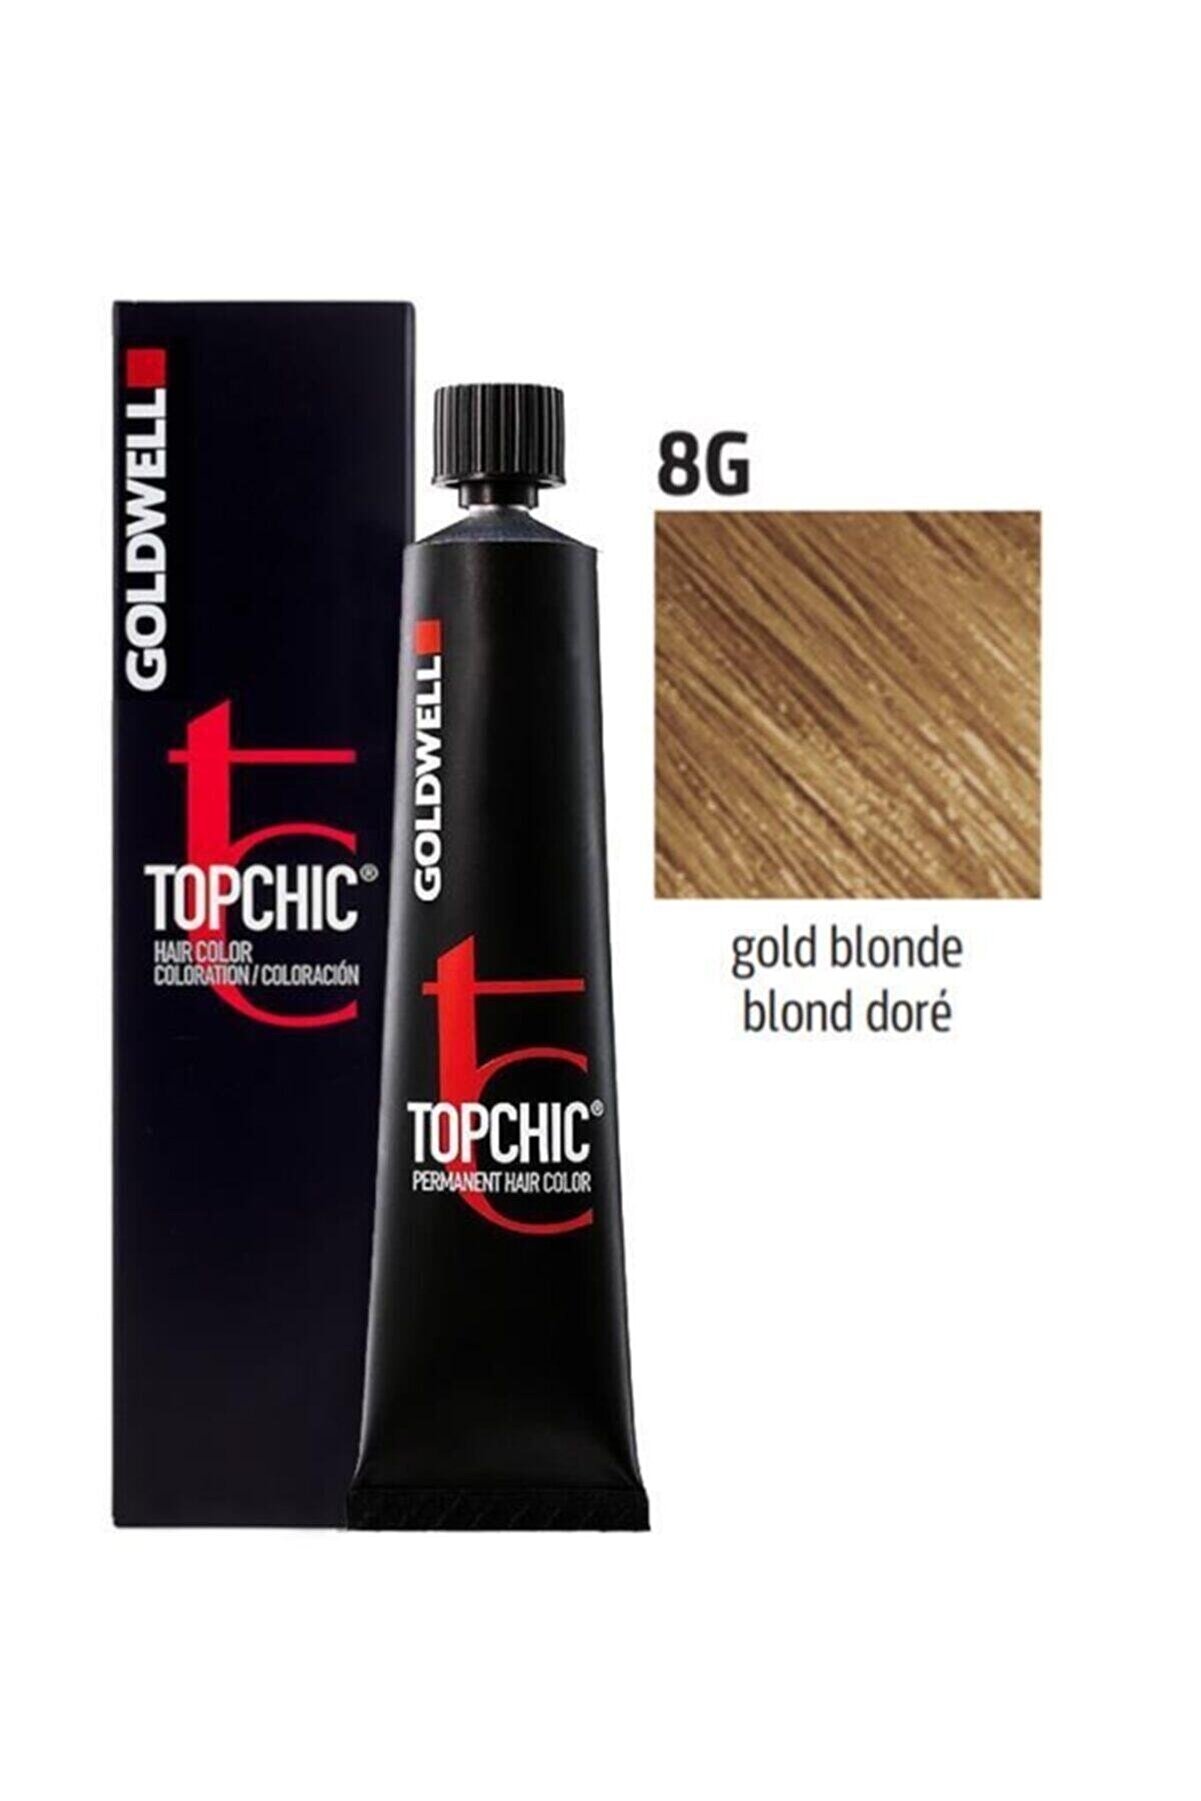 GOLDWELL 8g Açık Kumral Dore Topchich Kalıcı Saç Boyası 60 ml - 8g